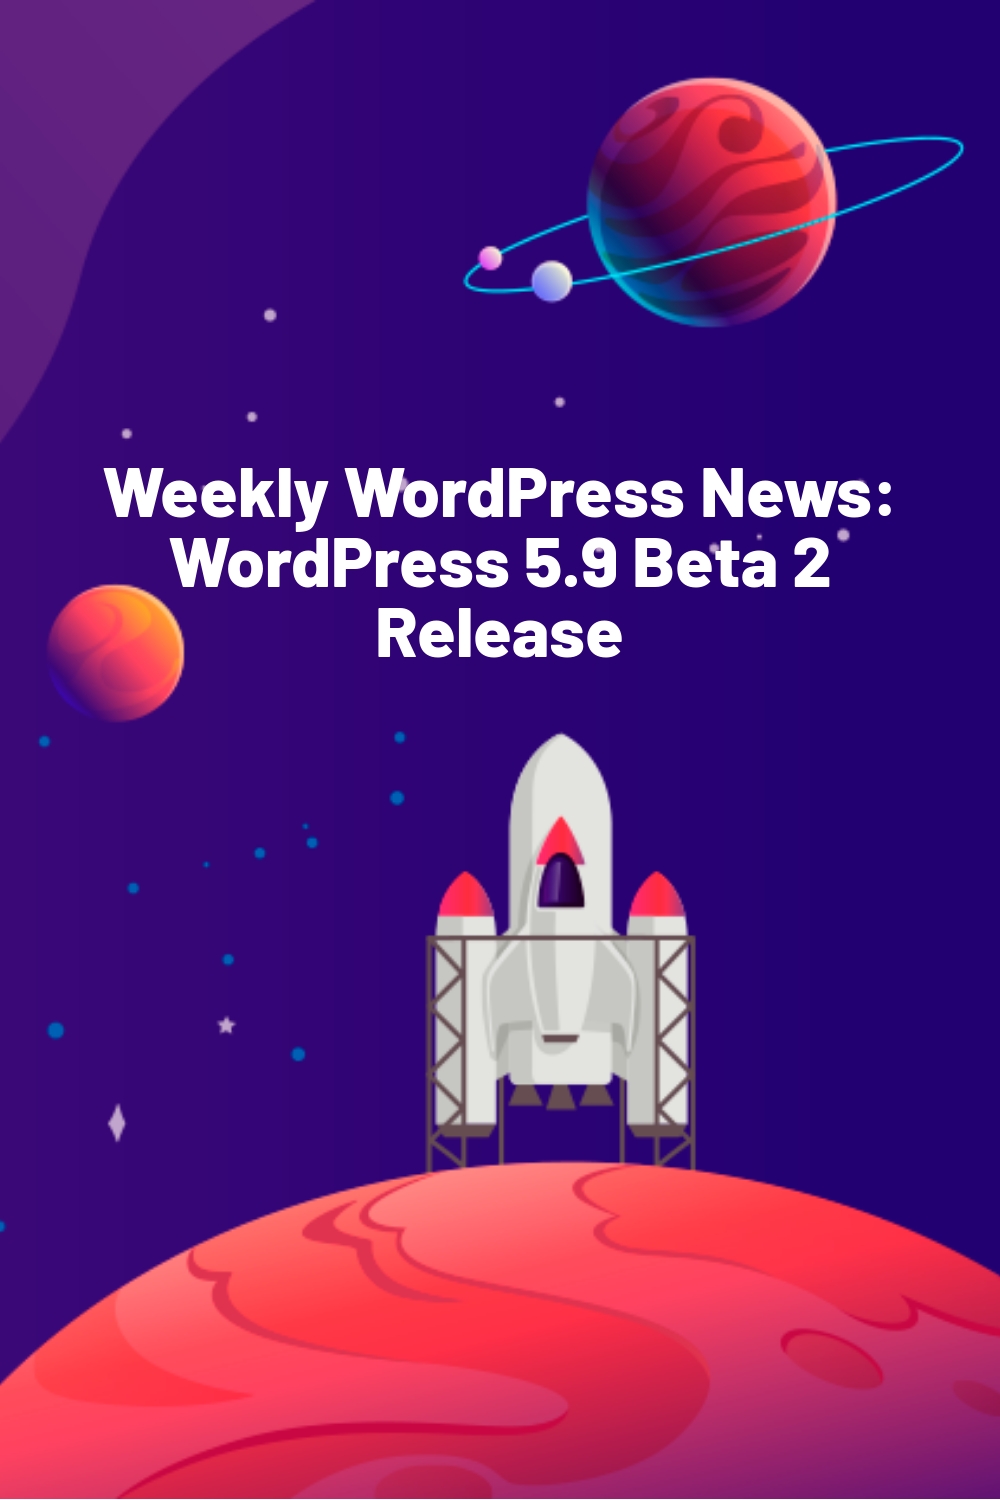 Weekly WordPress News: WordPress 5.9 Beta 2 Release